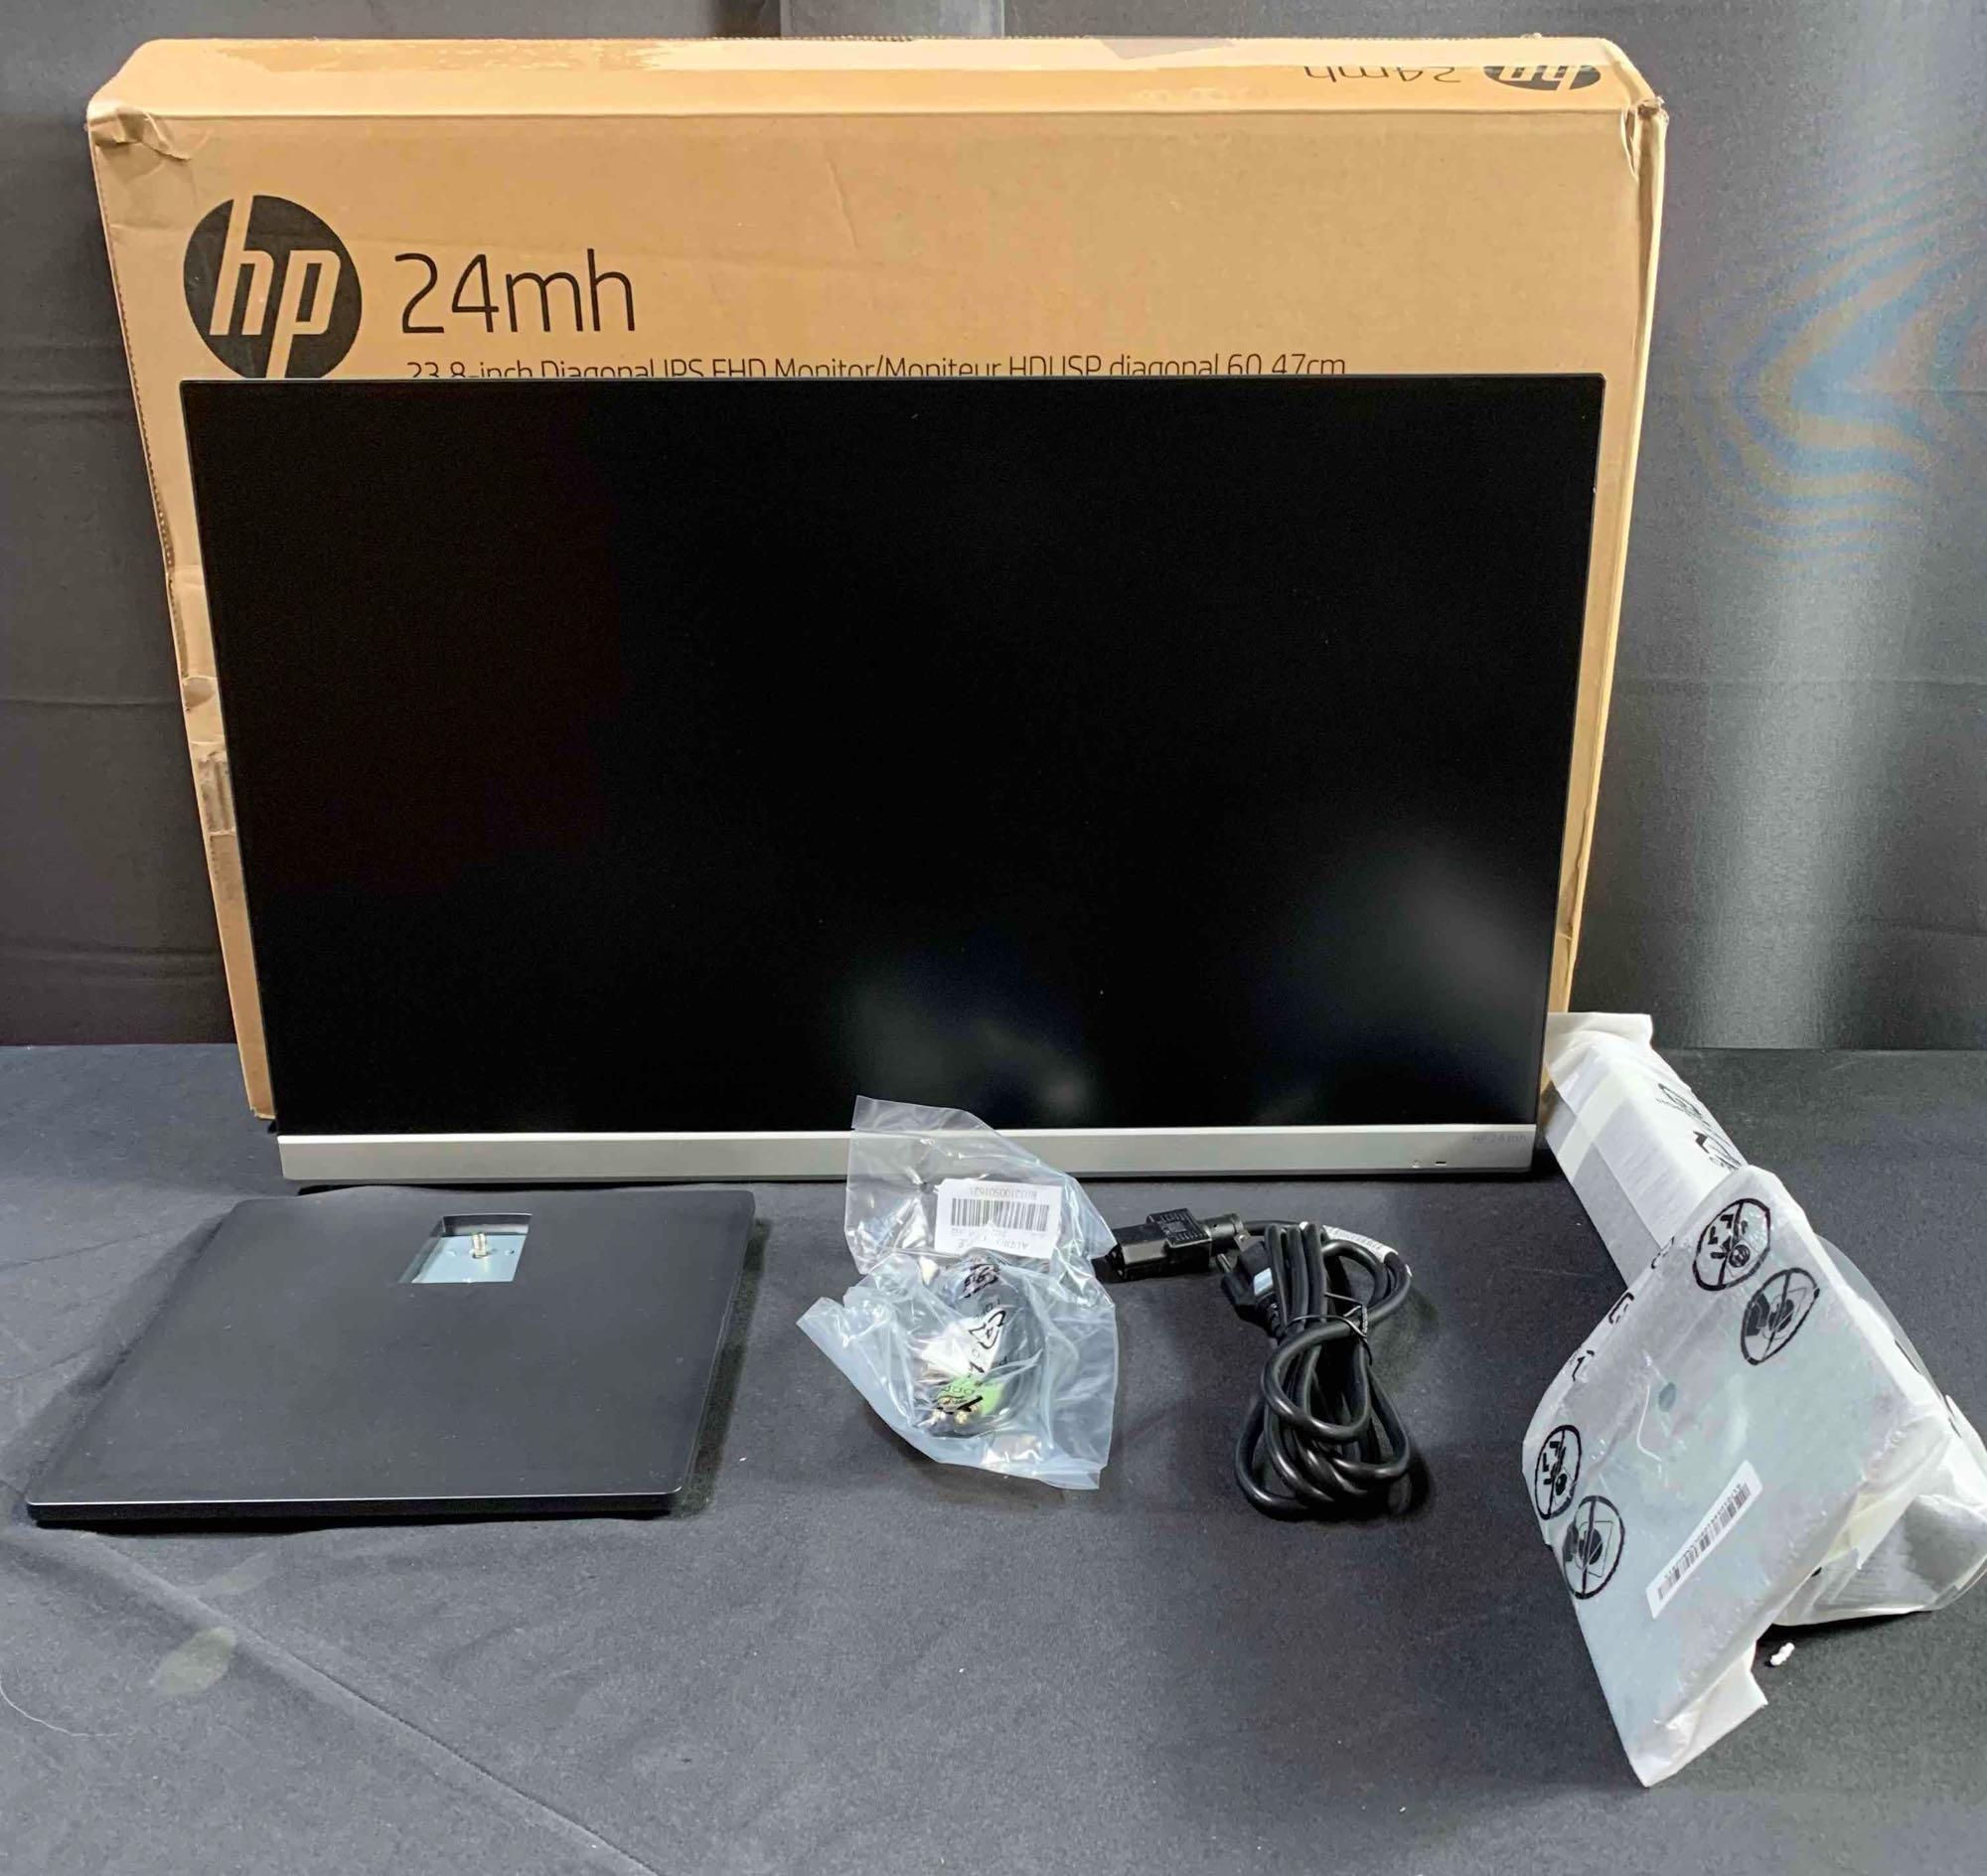 HP 24mh FHD Computer Monitor 23.8-Inch